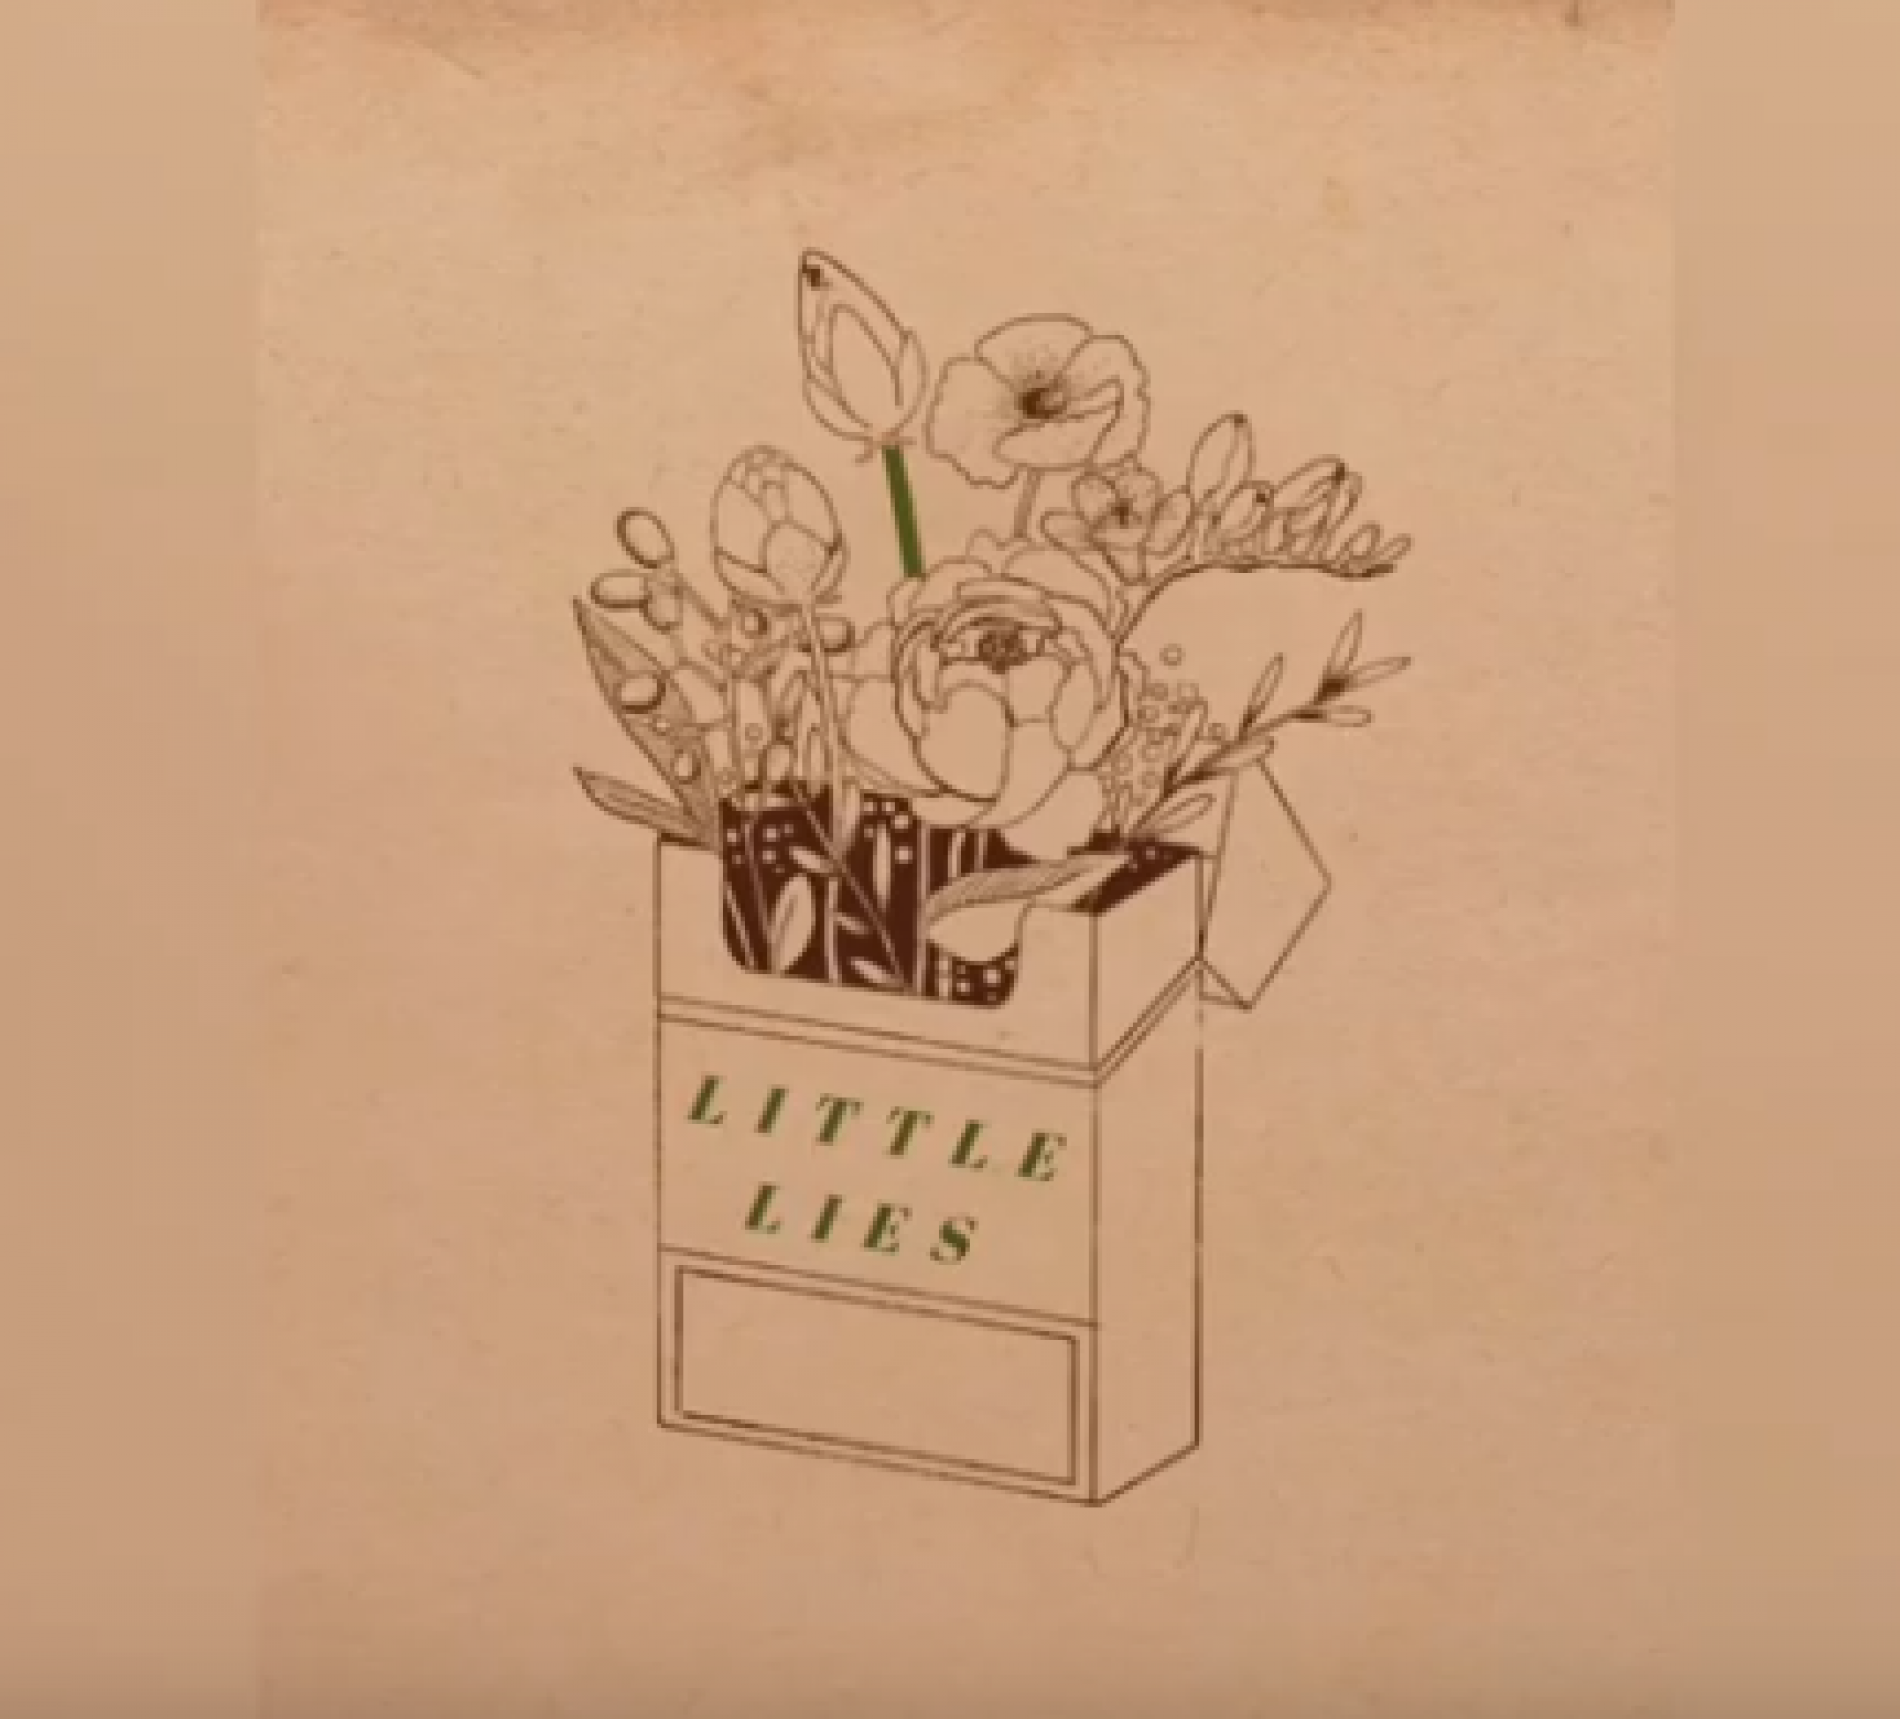 Little Lies – Arnon Ray Pereira (ProdbytheFirstMan)